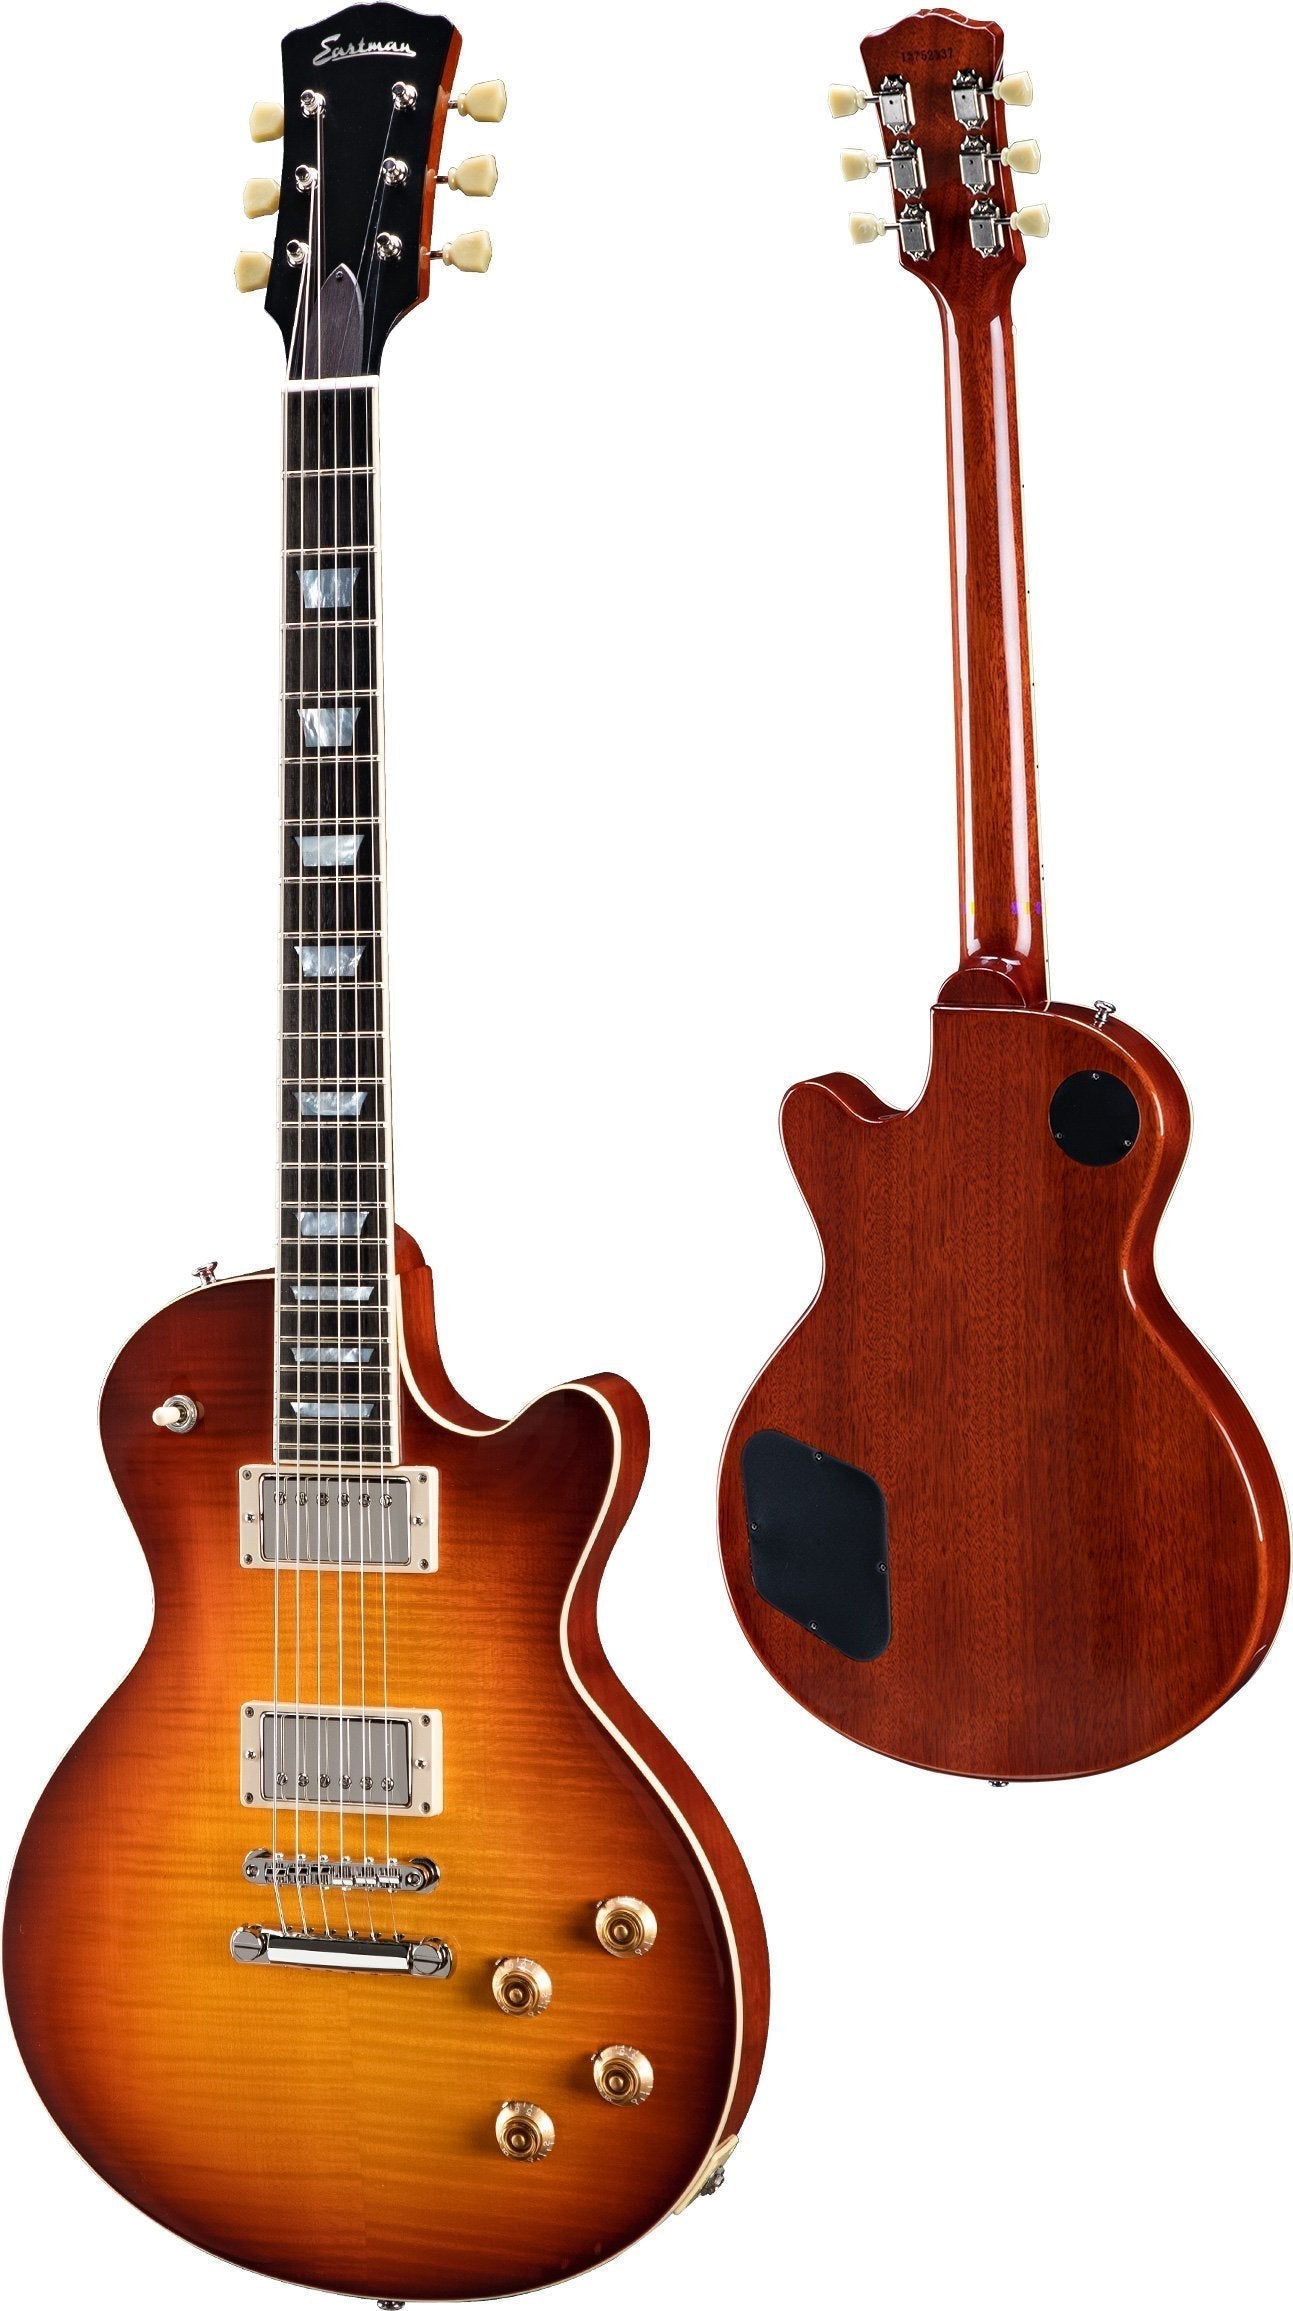 Eastman SB59/TV RB, Electric Guitar for sale at Richards Guitars.